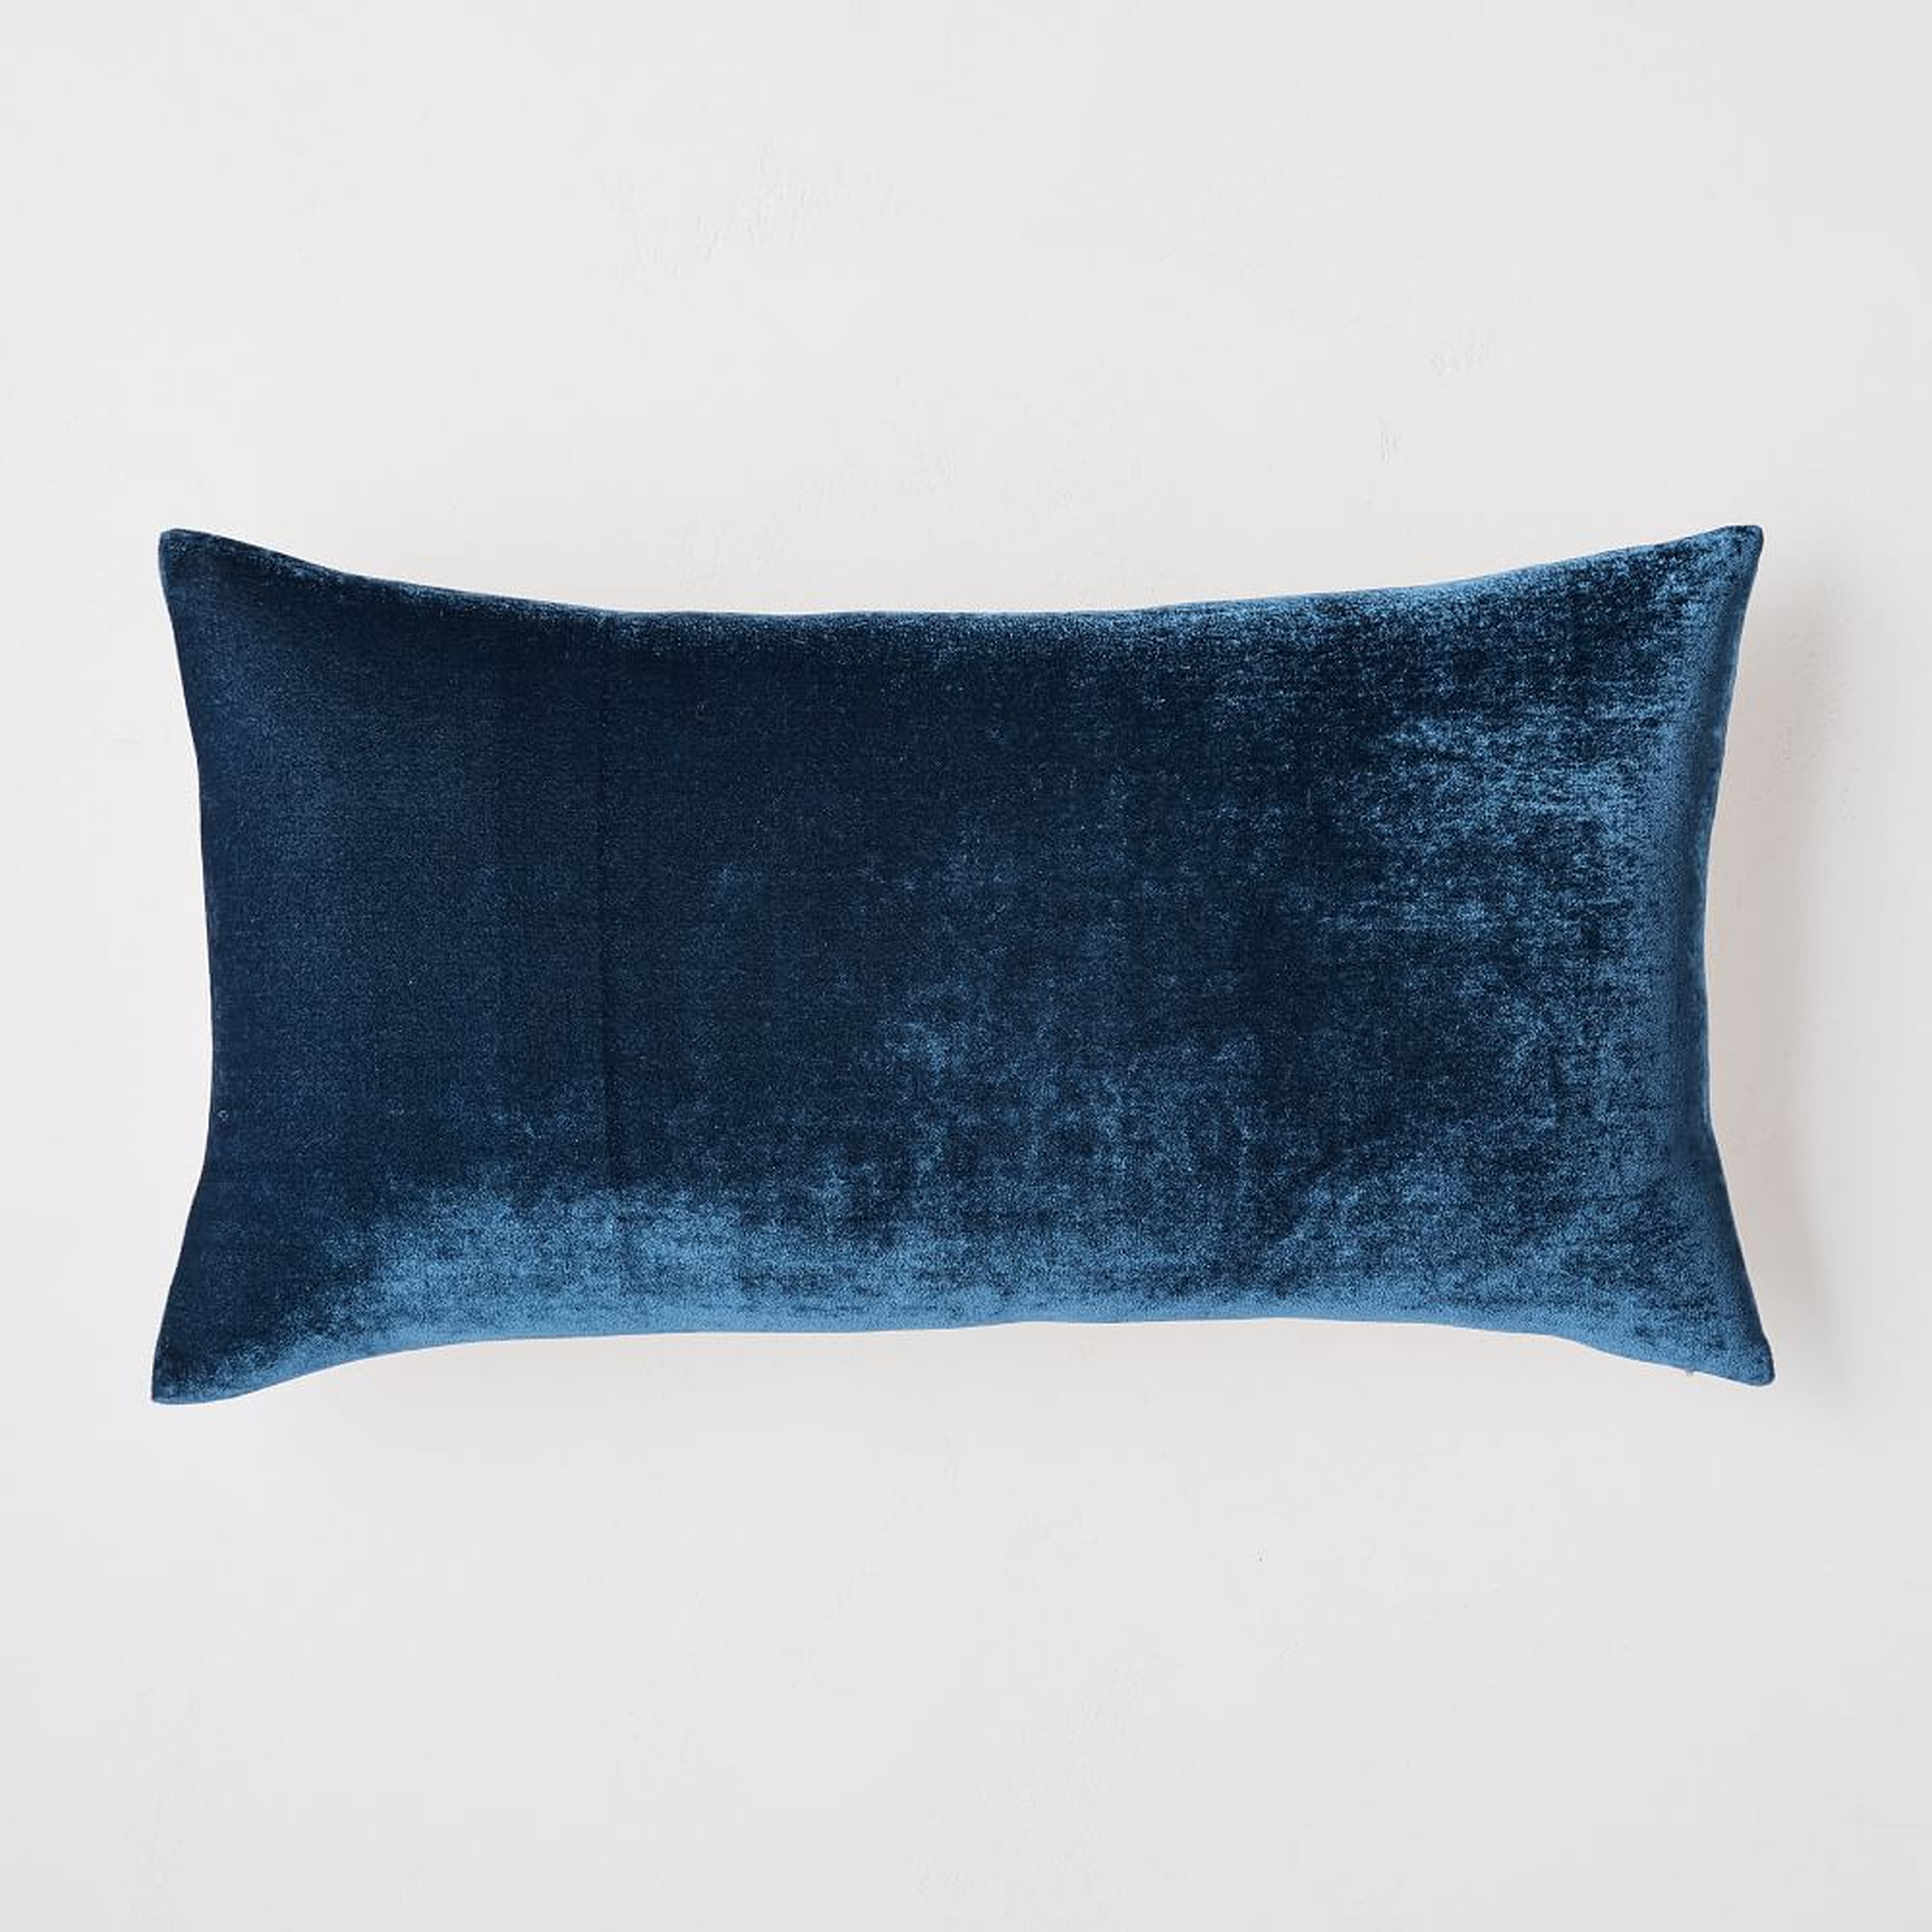 Lush Velvet Pillow Cover, 14"x26", Regal Blue - West Elm